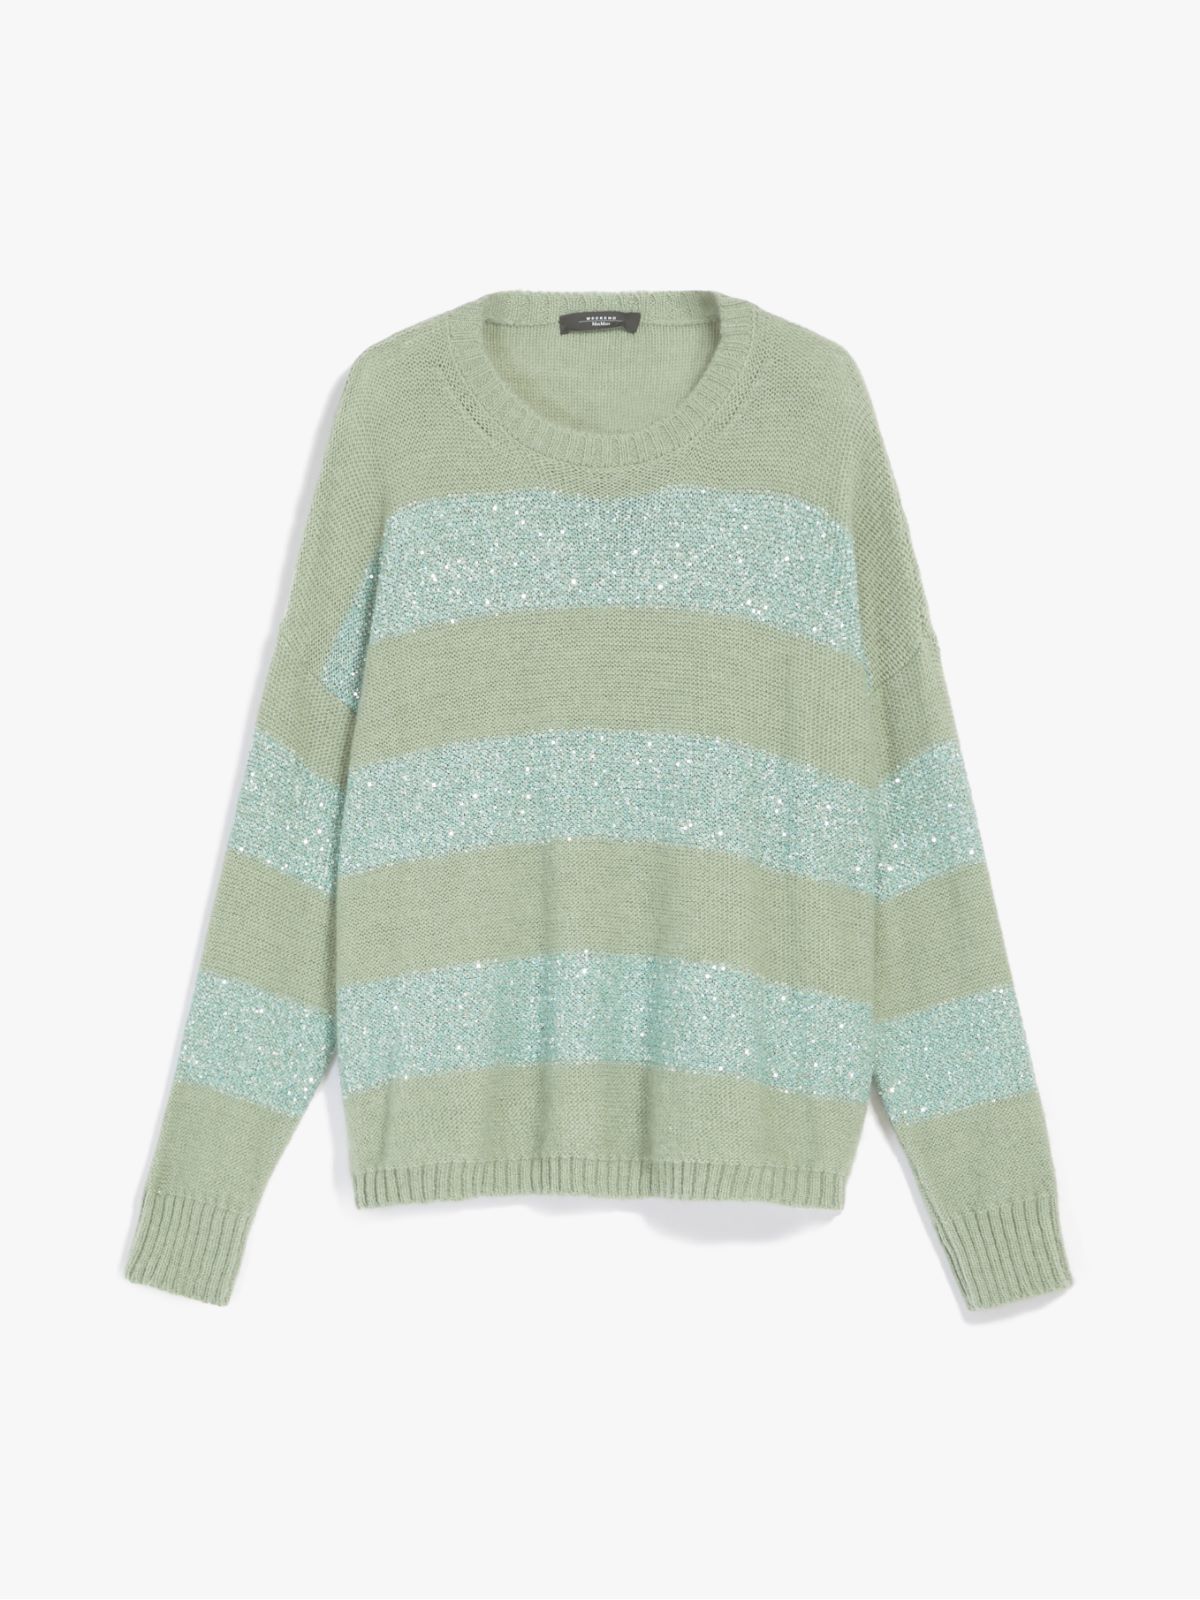 Sequin sweater - SAGE GREEN - Weekend Max Mara - 6